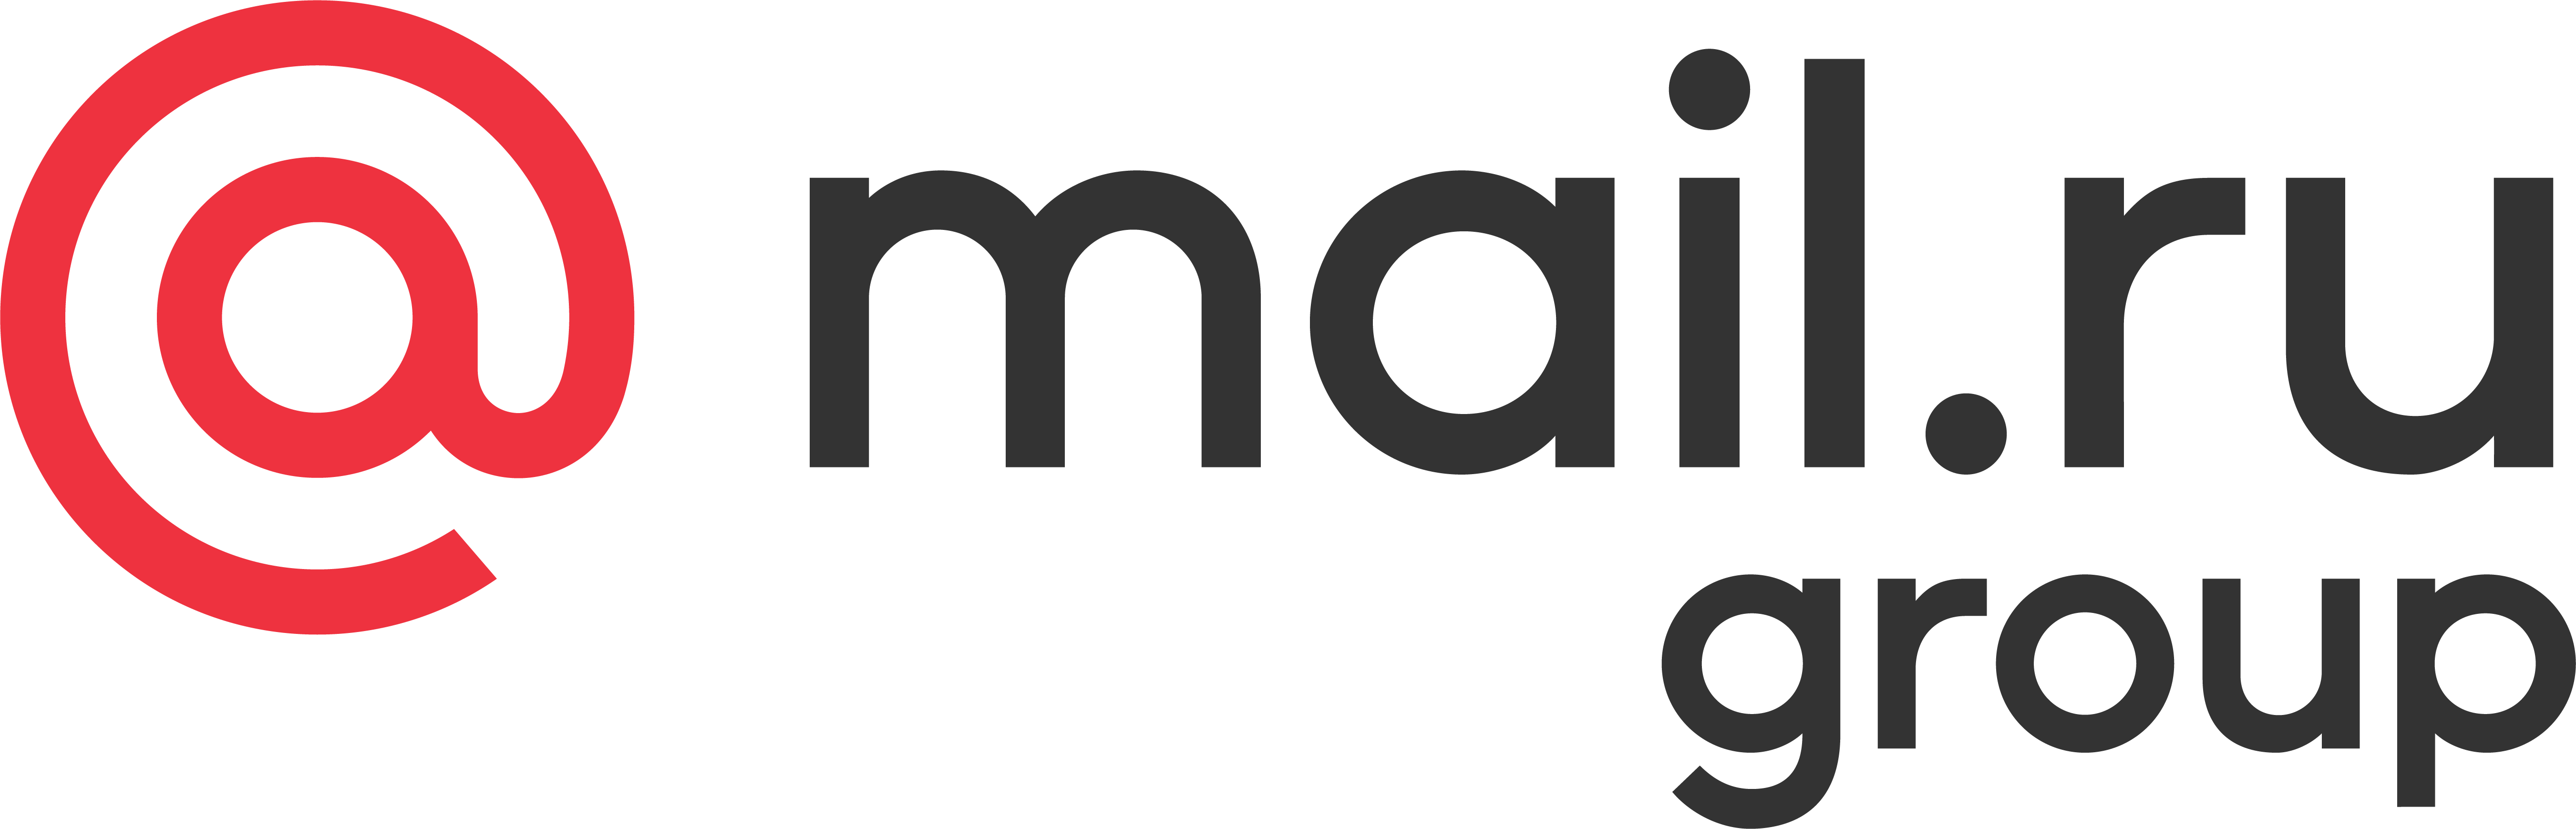 Mail.ru Group логотип. Мейл лого. Майл ру. Mail.ru логотип PNG. Agrotechpro ru